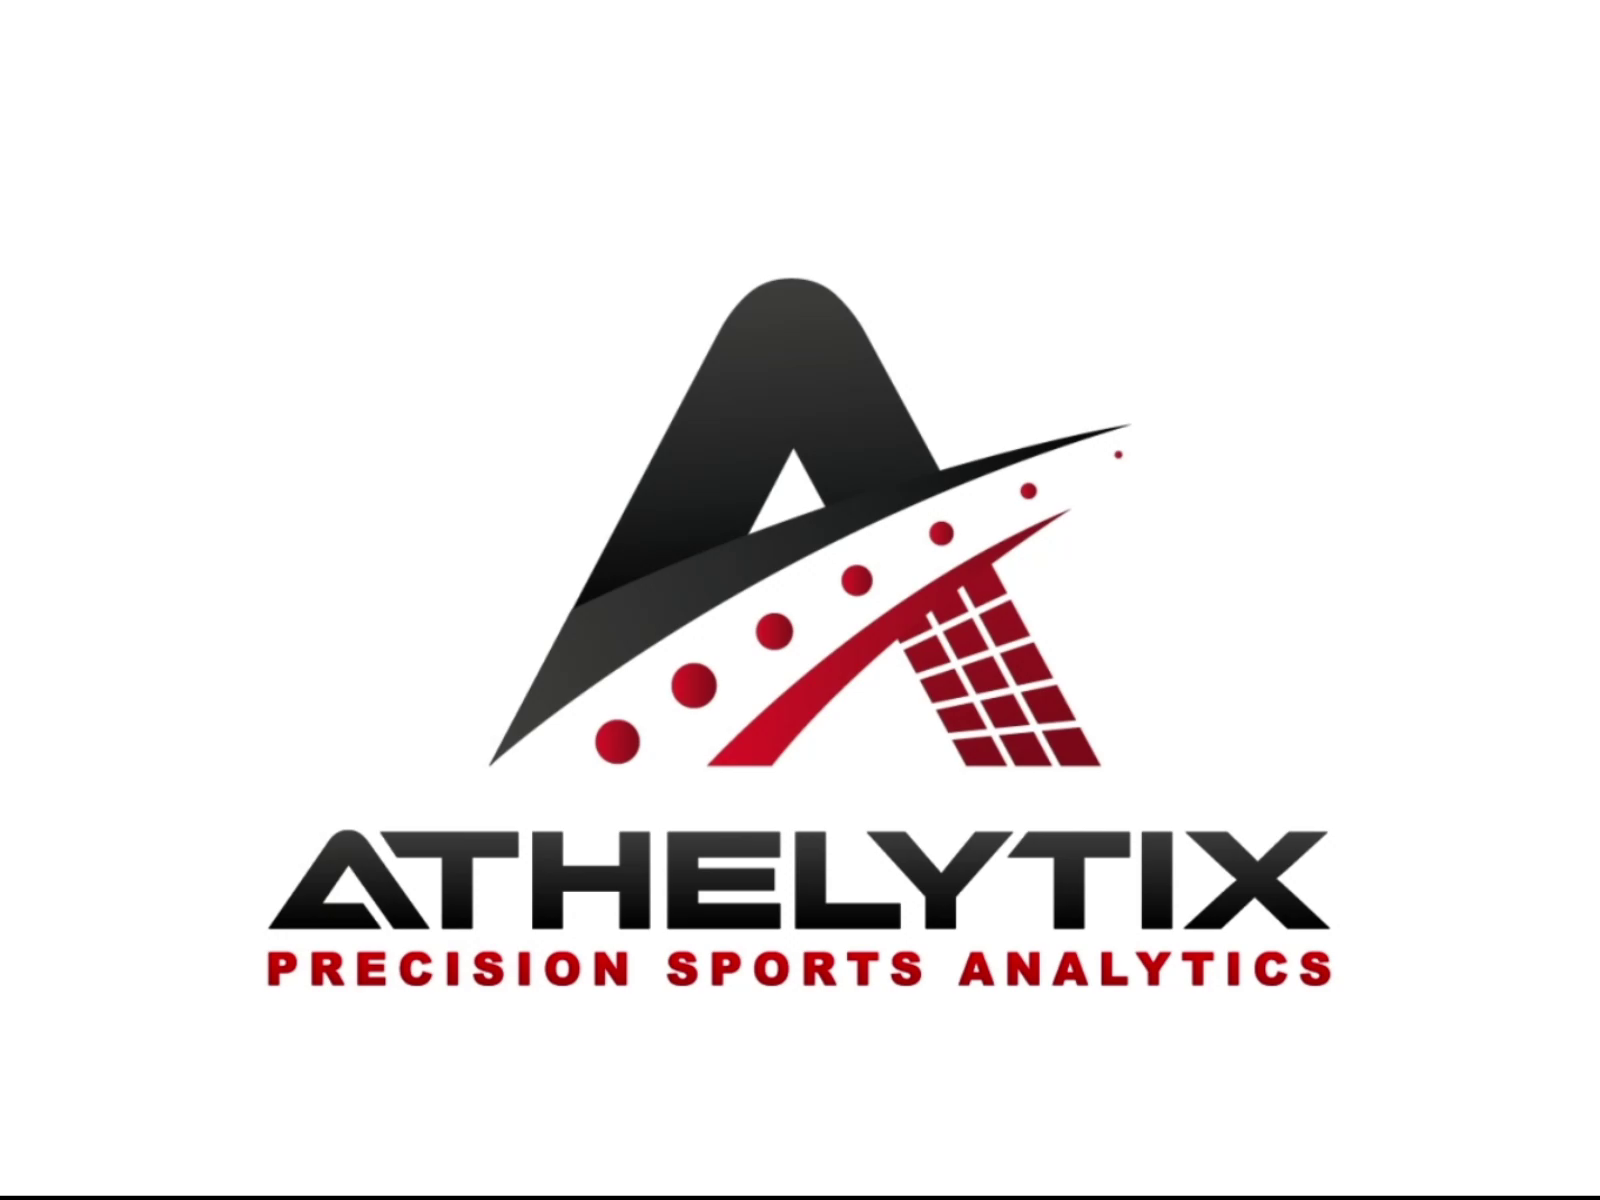 Logo Motion Design for Athelytix by Temis on Dribbble